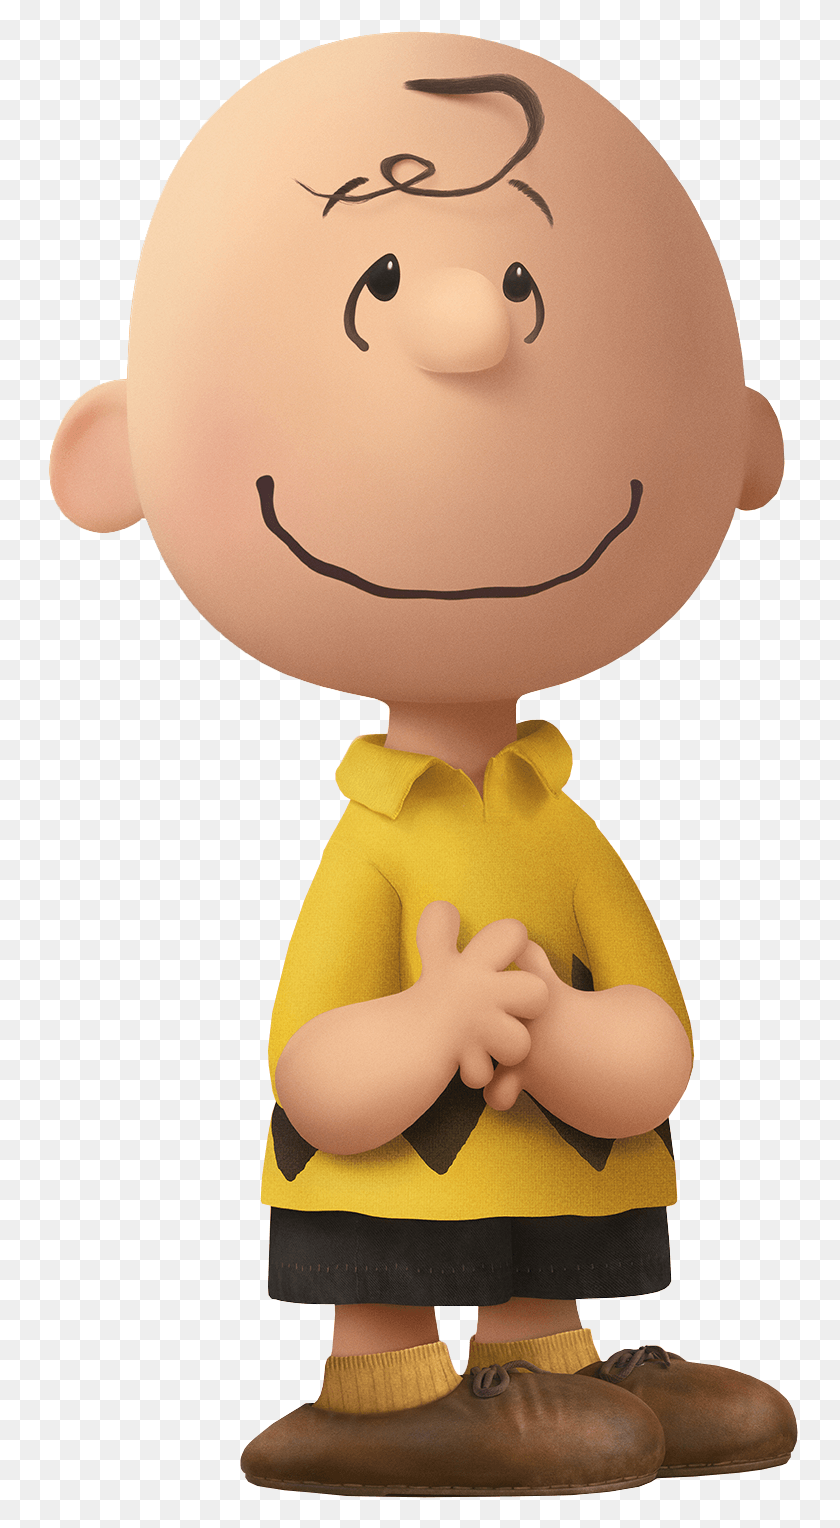 757x1468 Descargar Png / Charlie Brown De La Película Peanuts, Muñeca, Juguete, Figurilla Hd Png